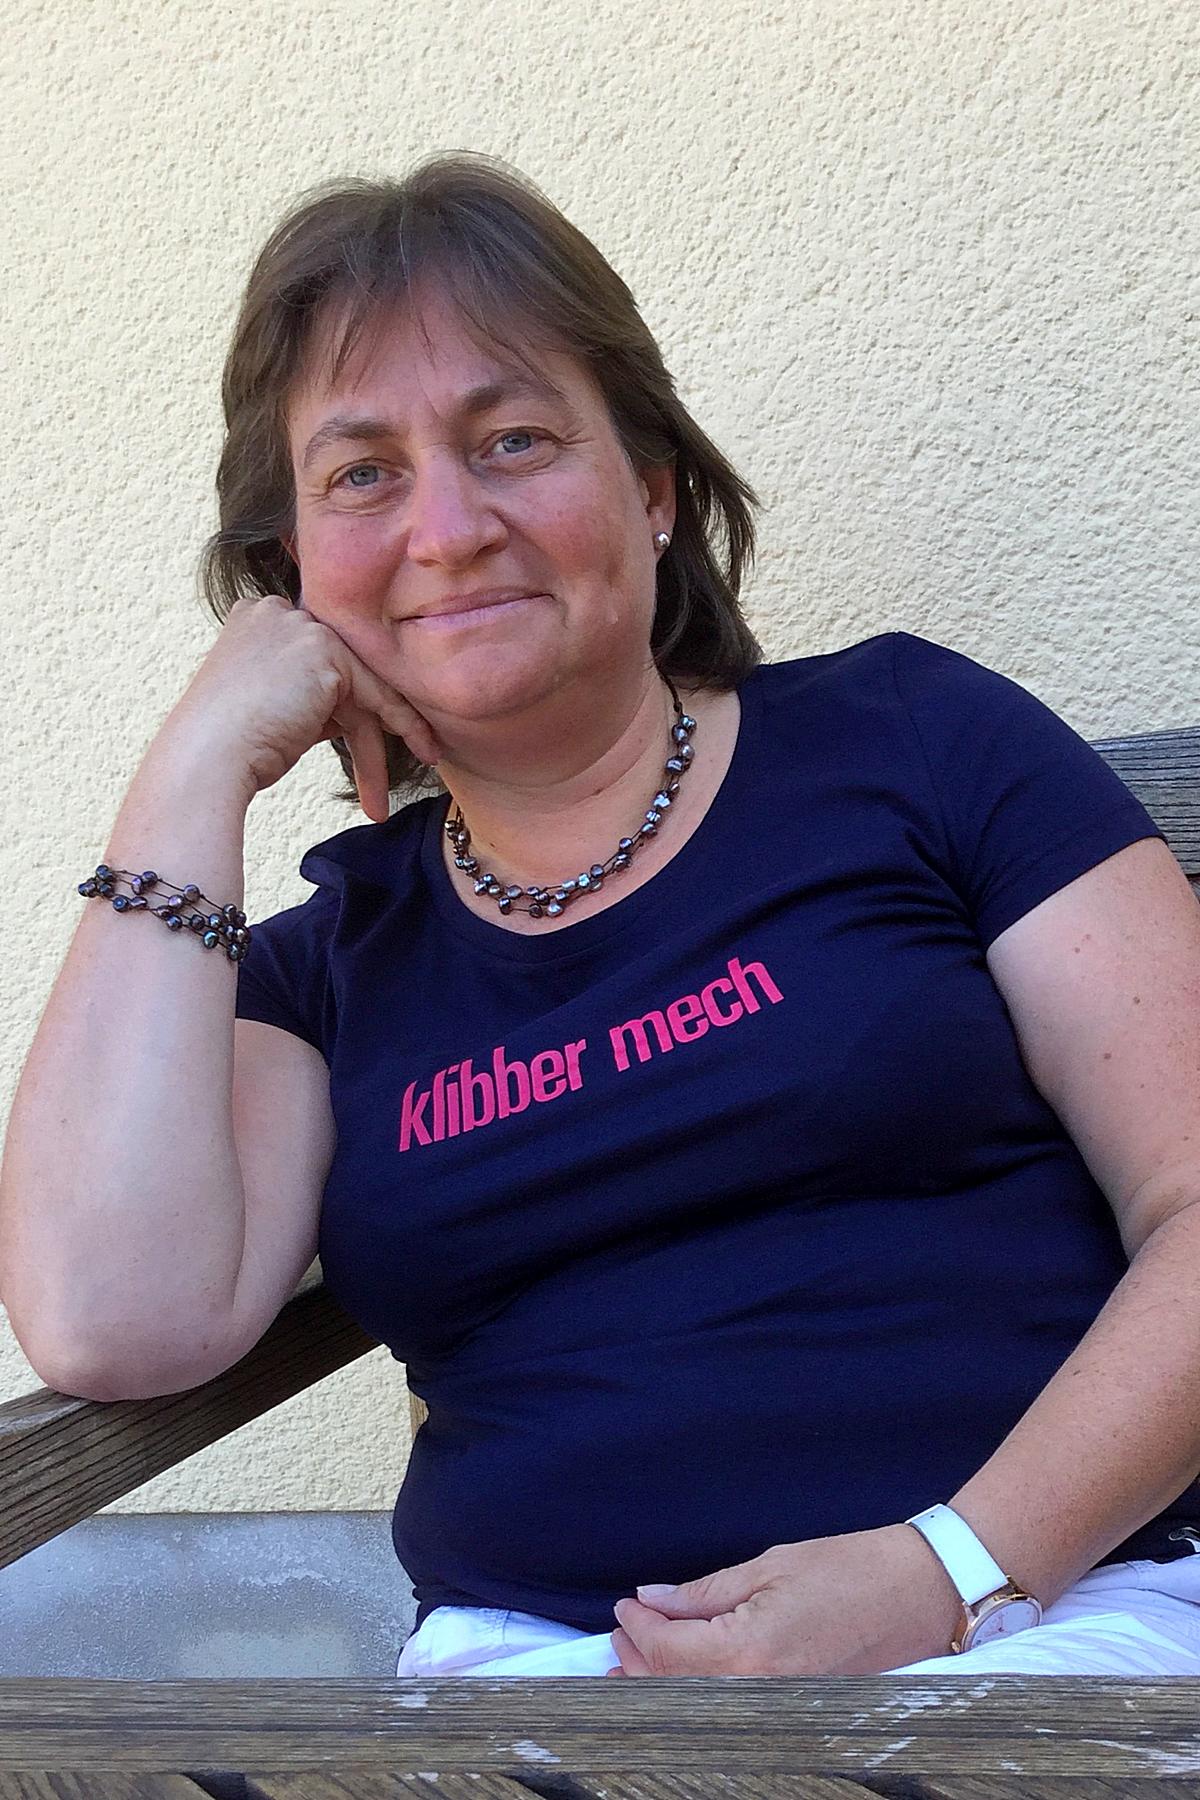 WOMEN'S T-SHIRT "klibber mech": Shirt colour "French navy", Print "red"